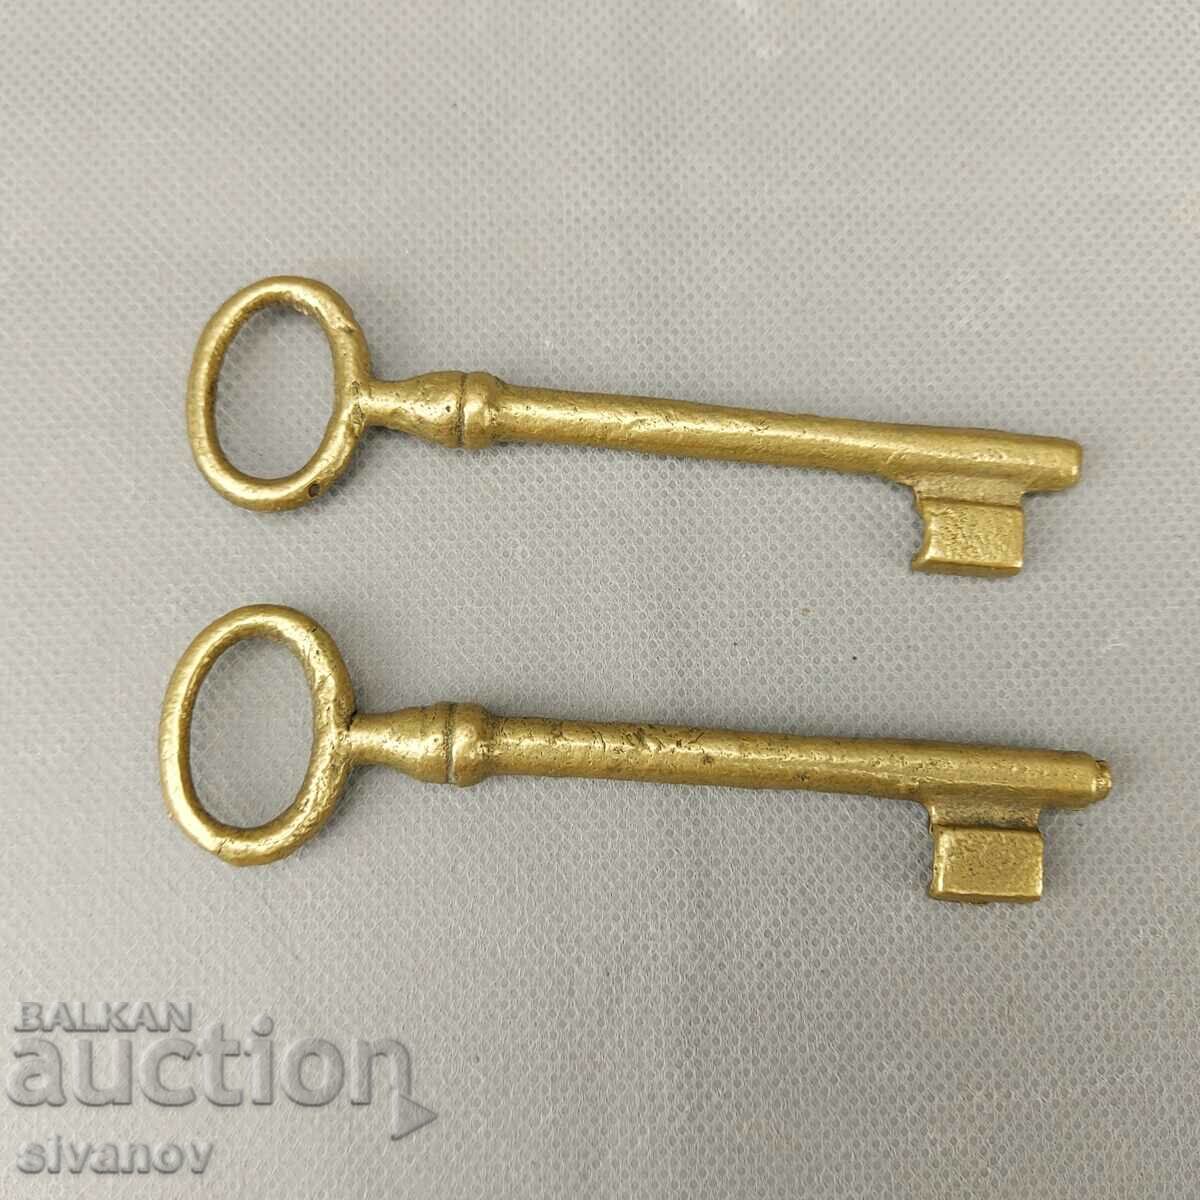 Old bronze keys 2 pieces #0394